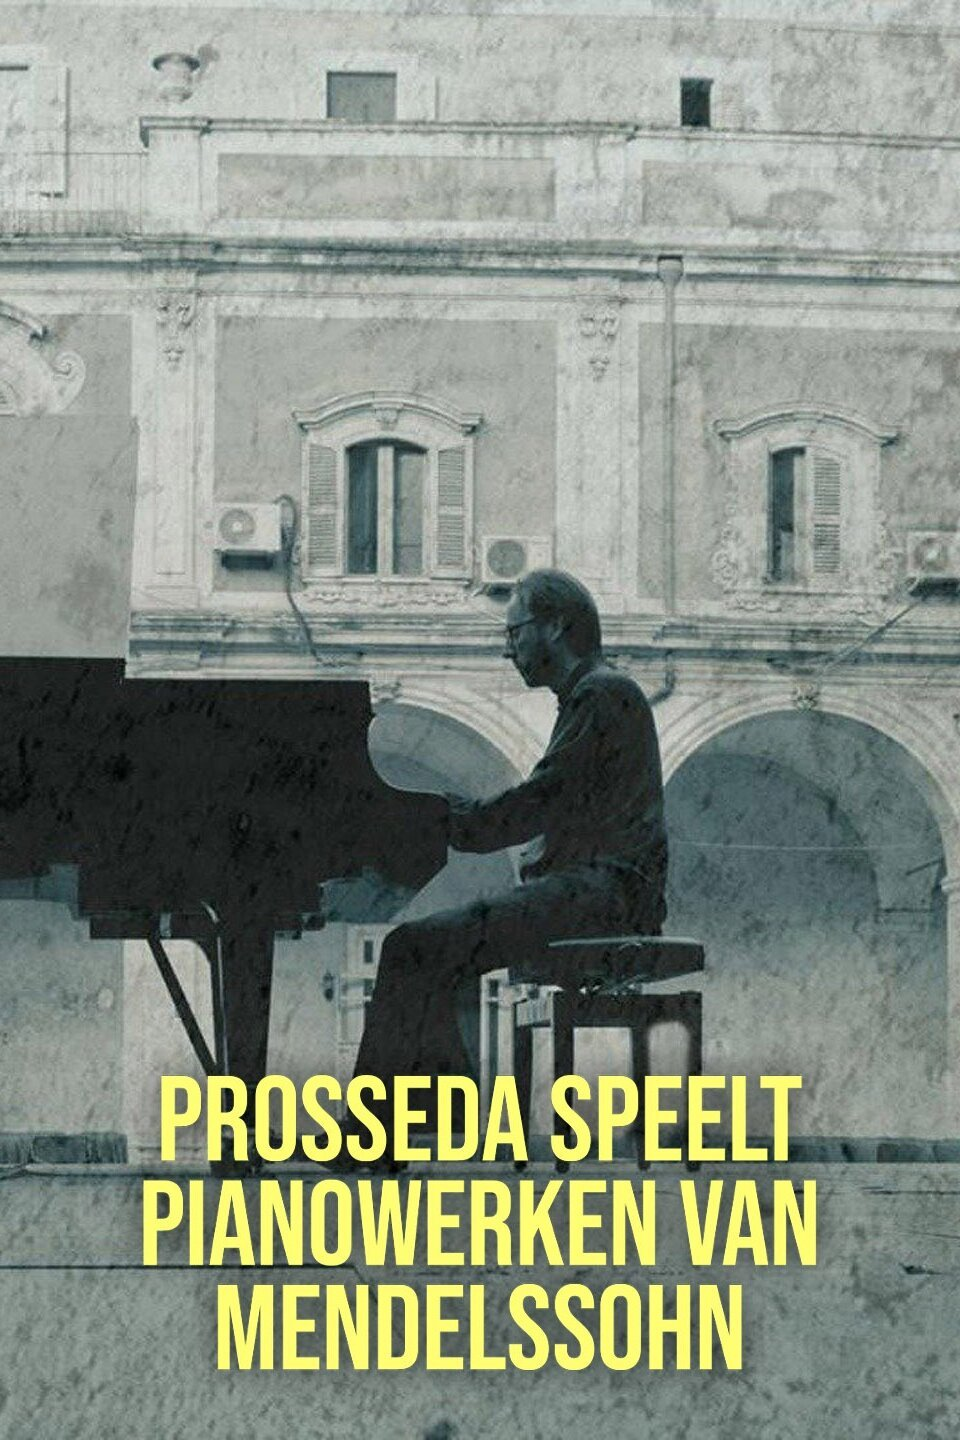 Prosseda speelt pianowerken van Mendelssohn